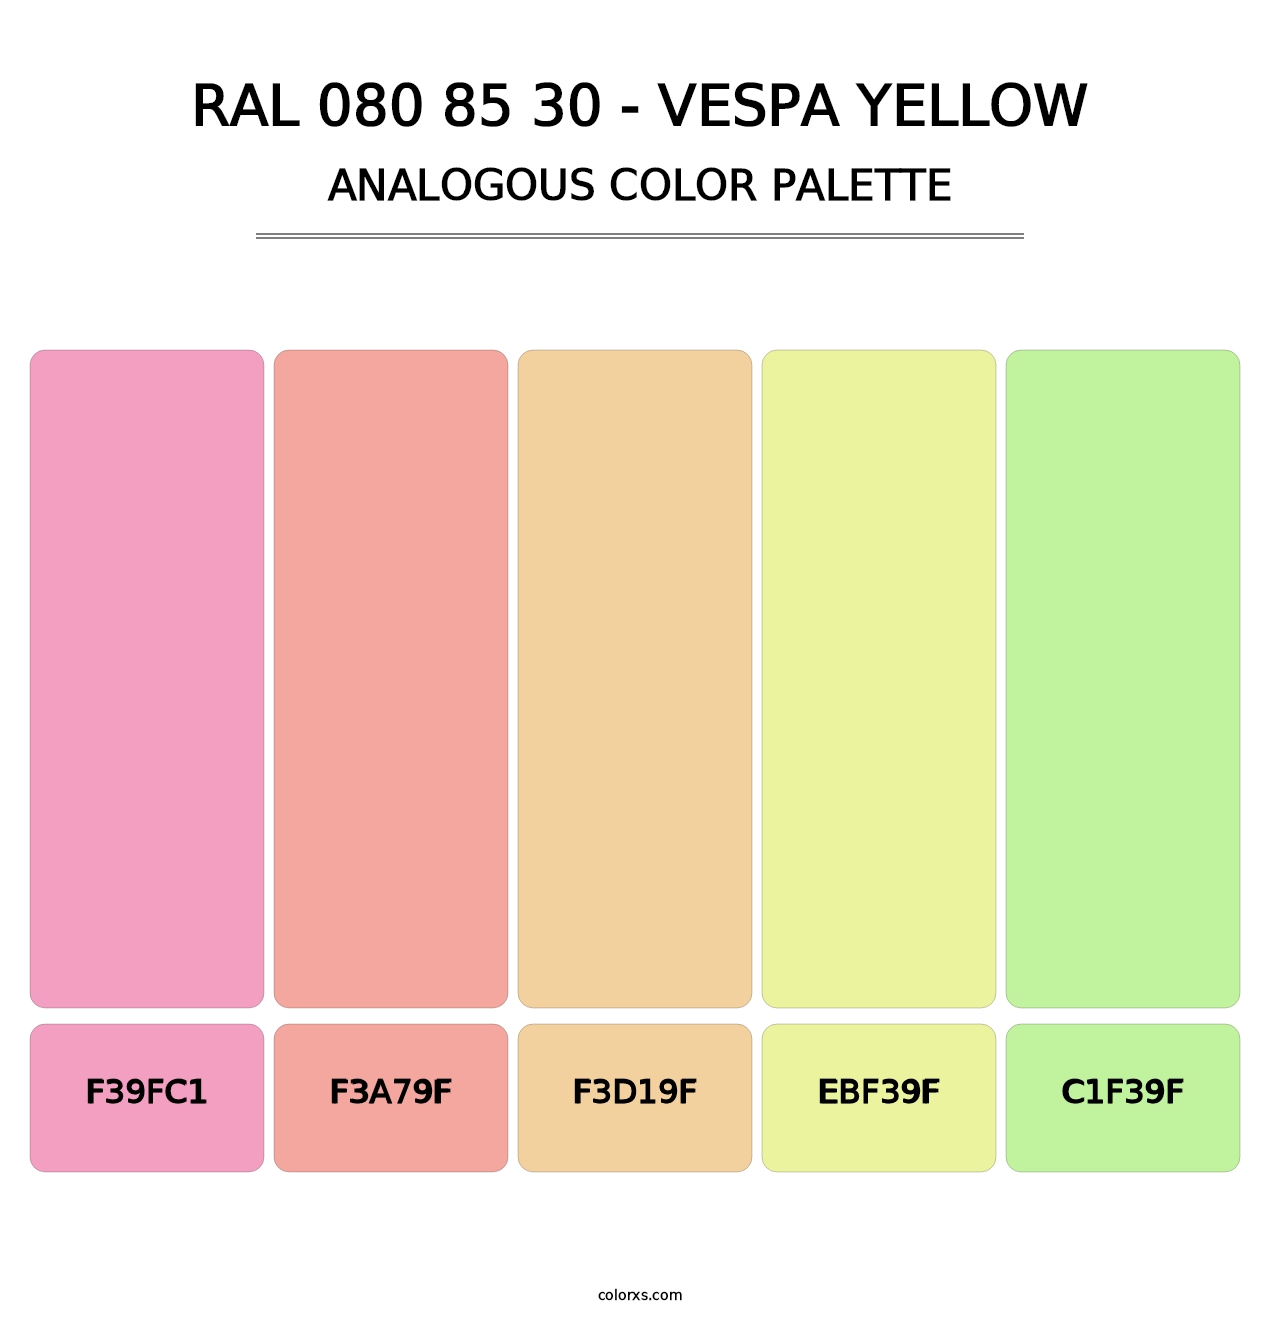 RAL 080 85 30 - Vespa Yellow - Analogous Color Palette